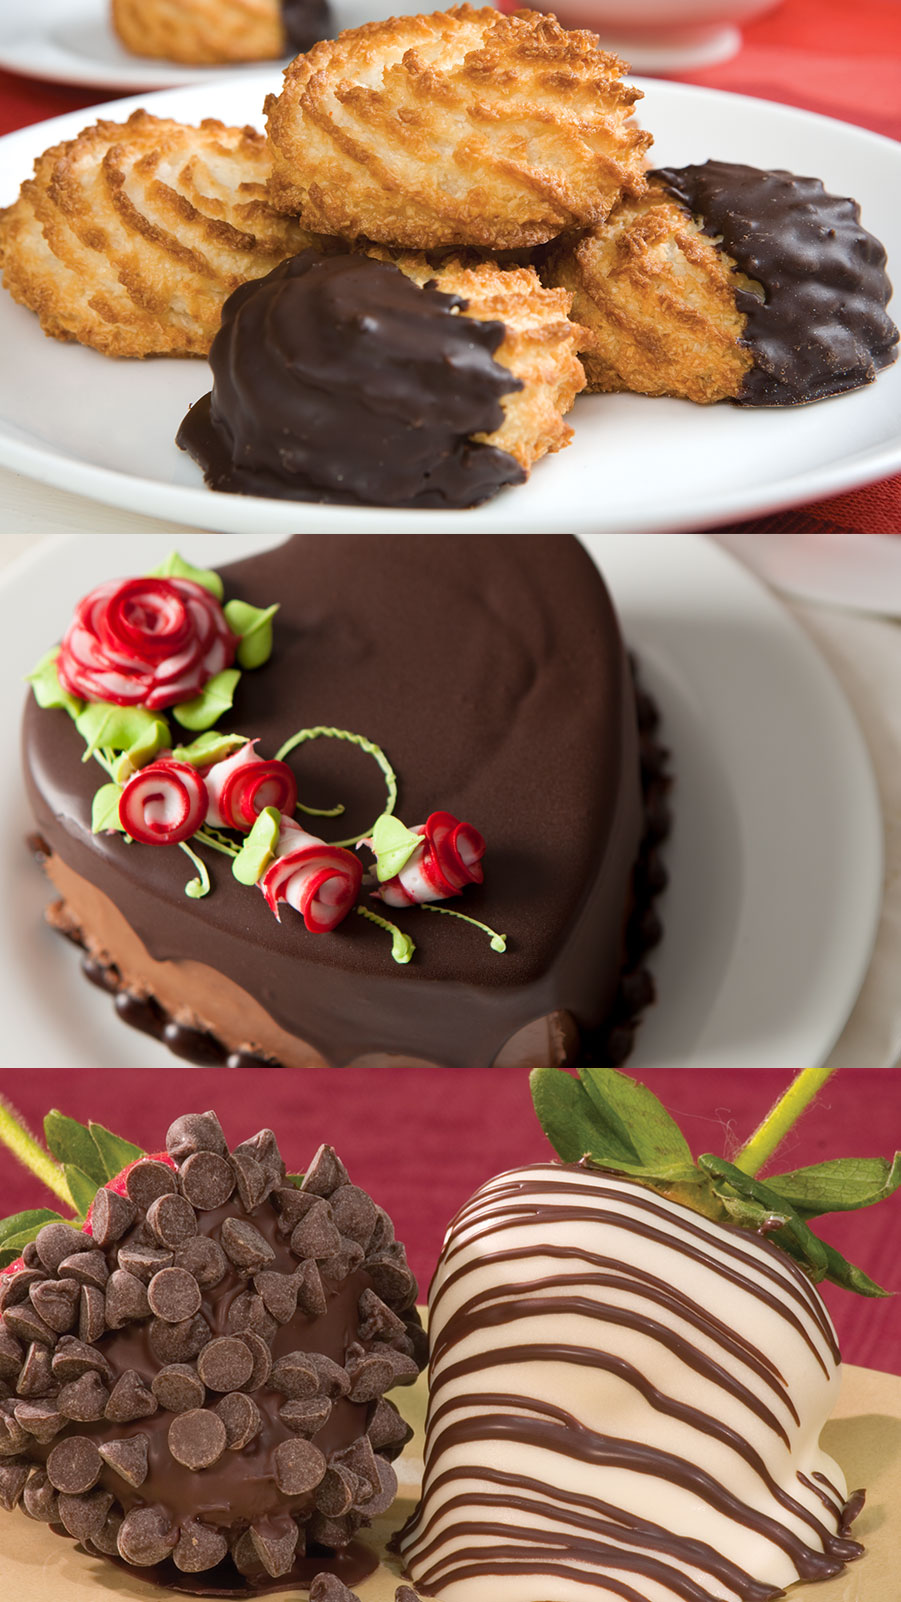 macaroons, chocolate heart cake, chocolate dipped strawberries